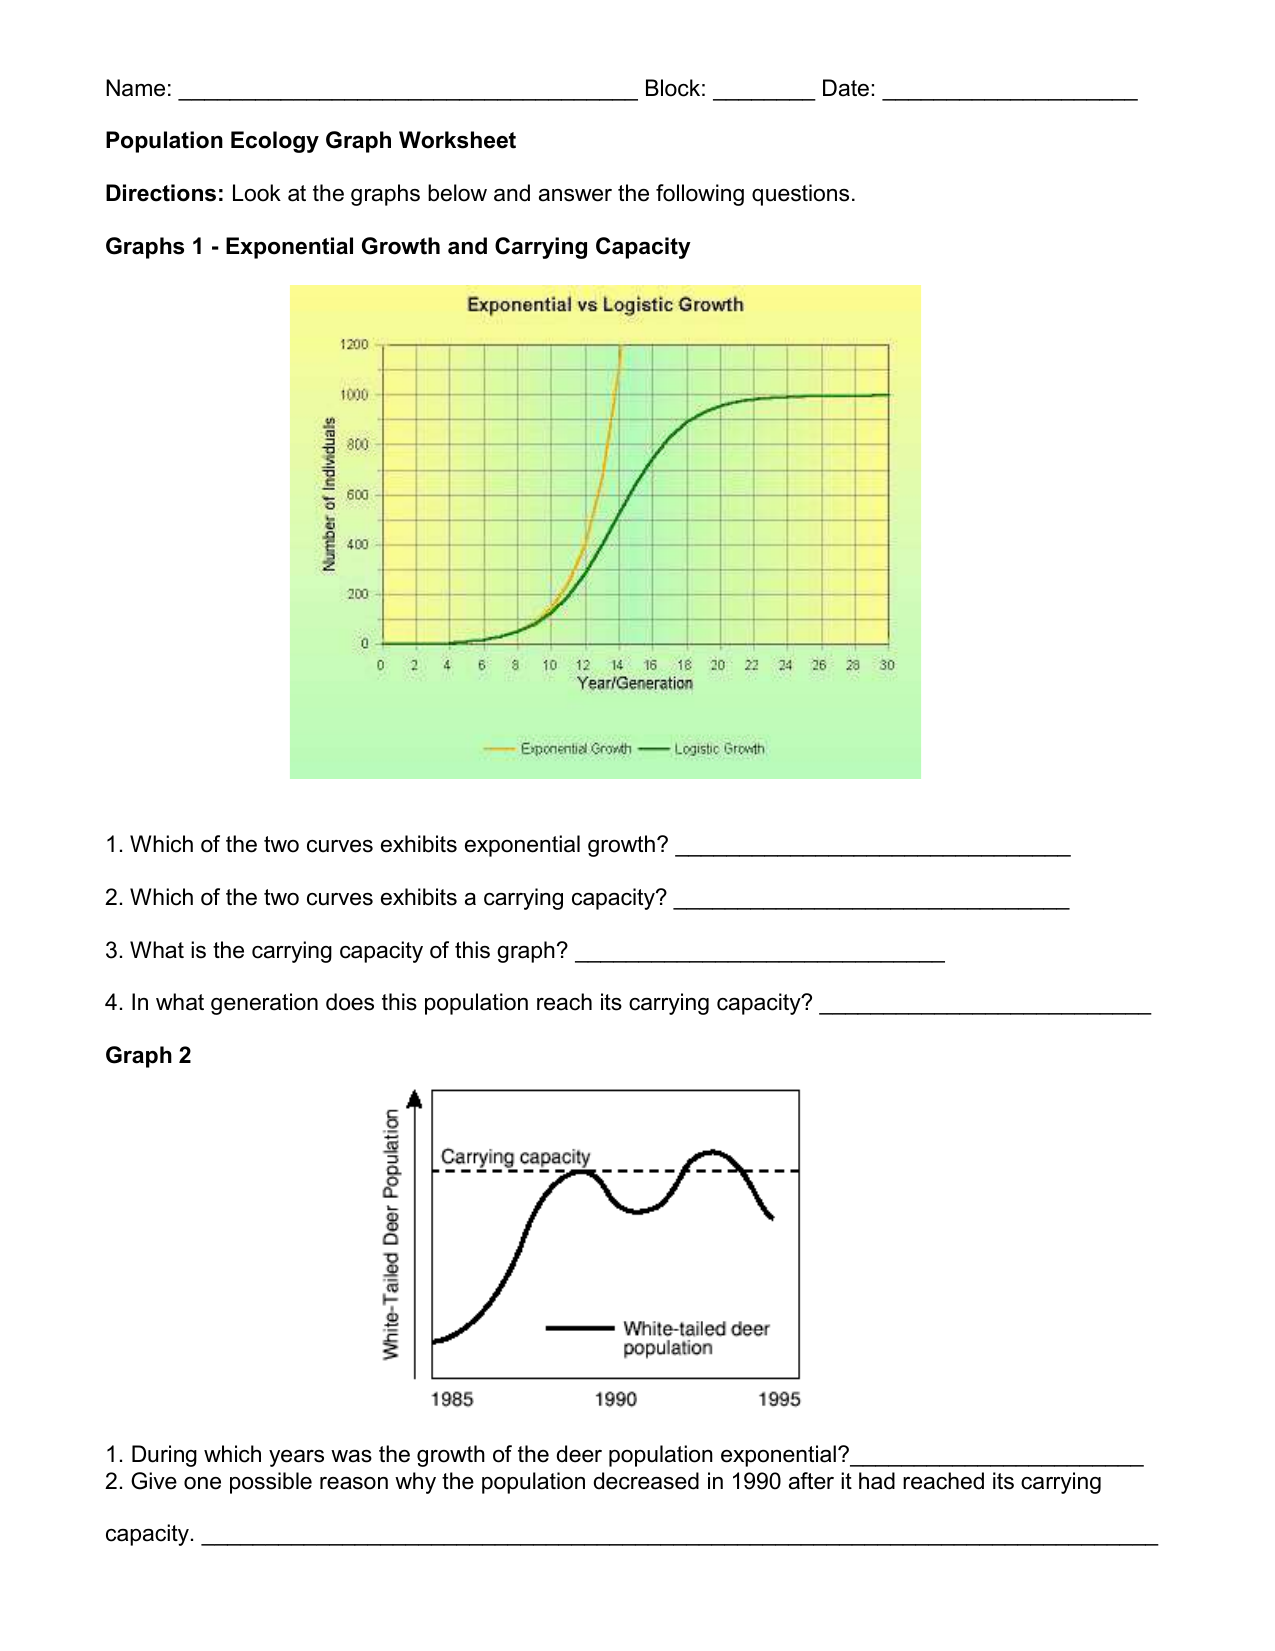 Population Ecology Graph Worksheet For Population Ecology Graphs Worksheet Answers